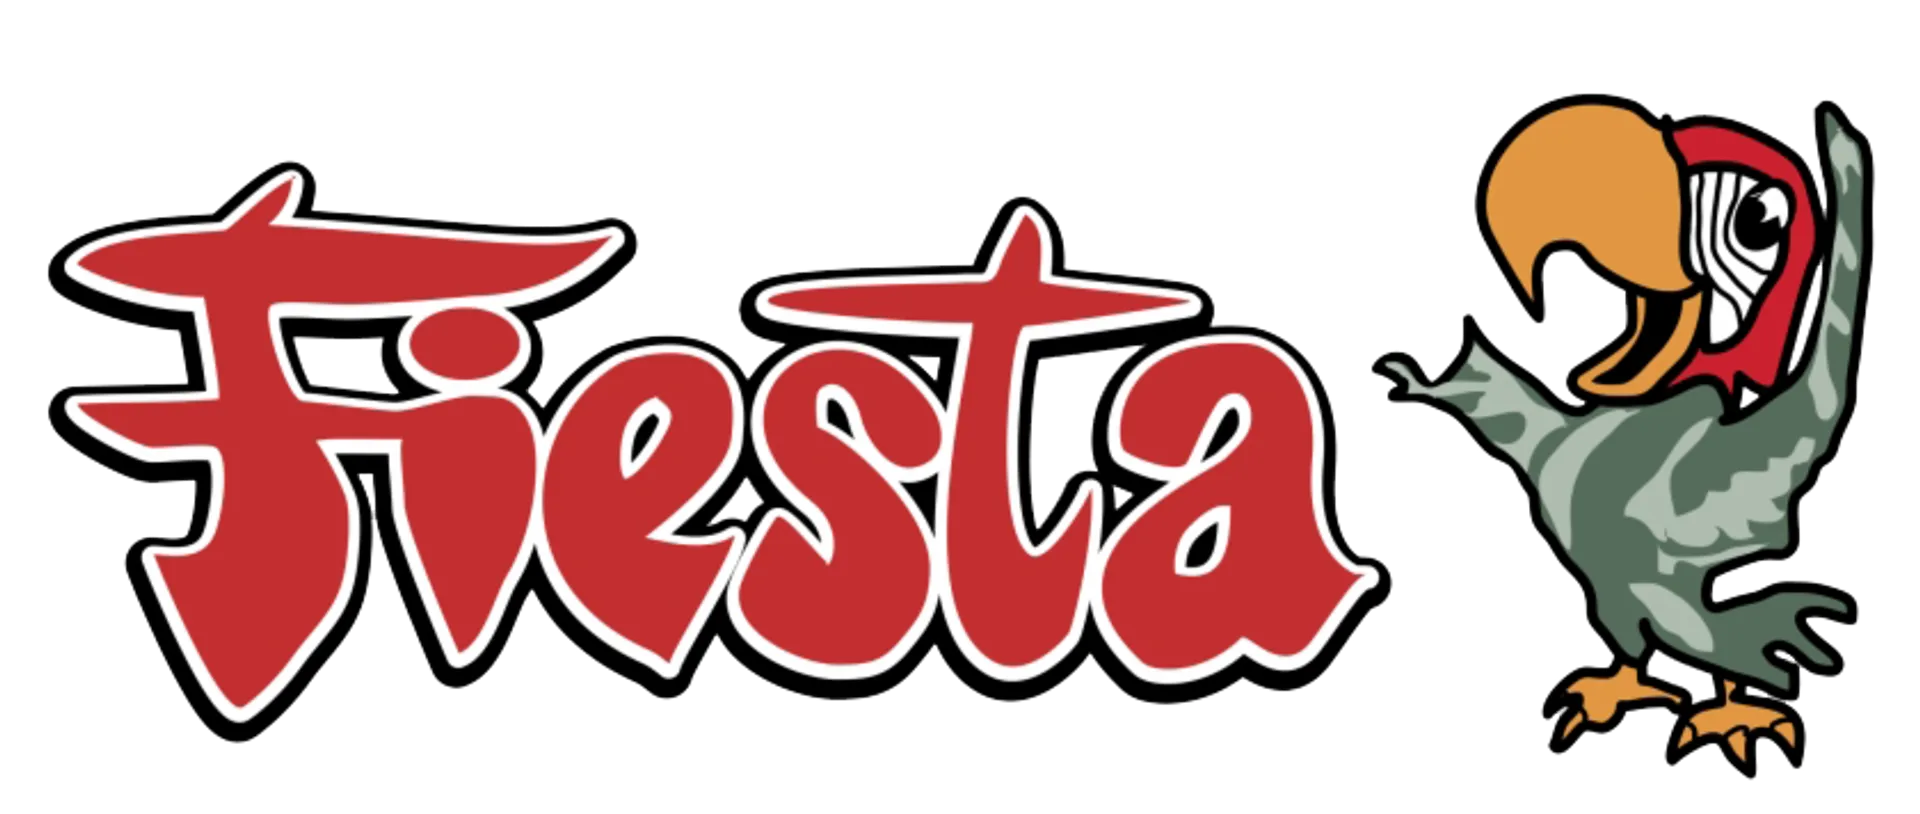 FIESTA MART logo